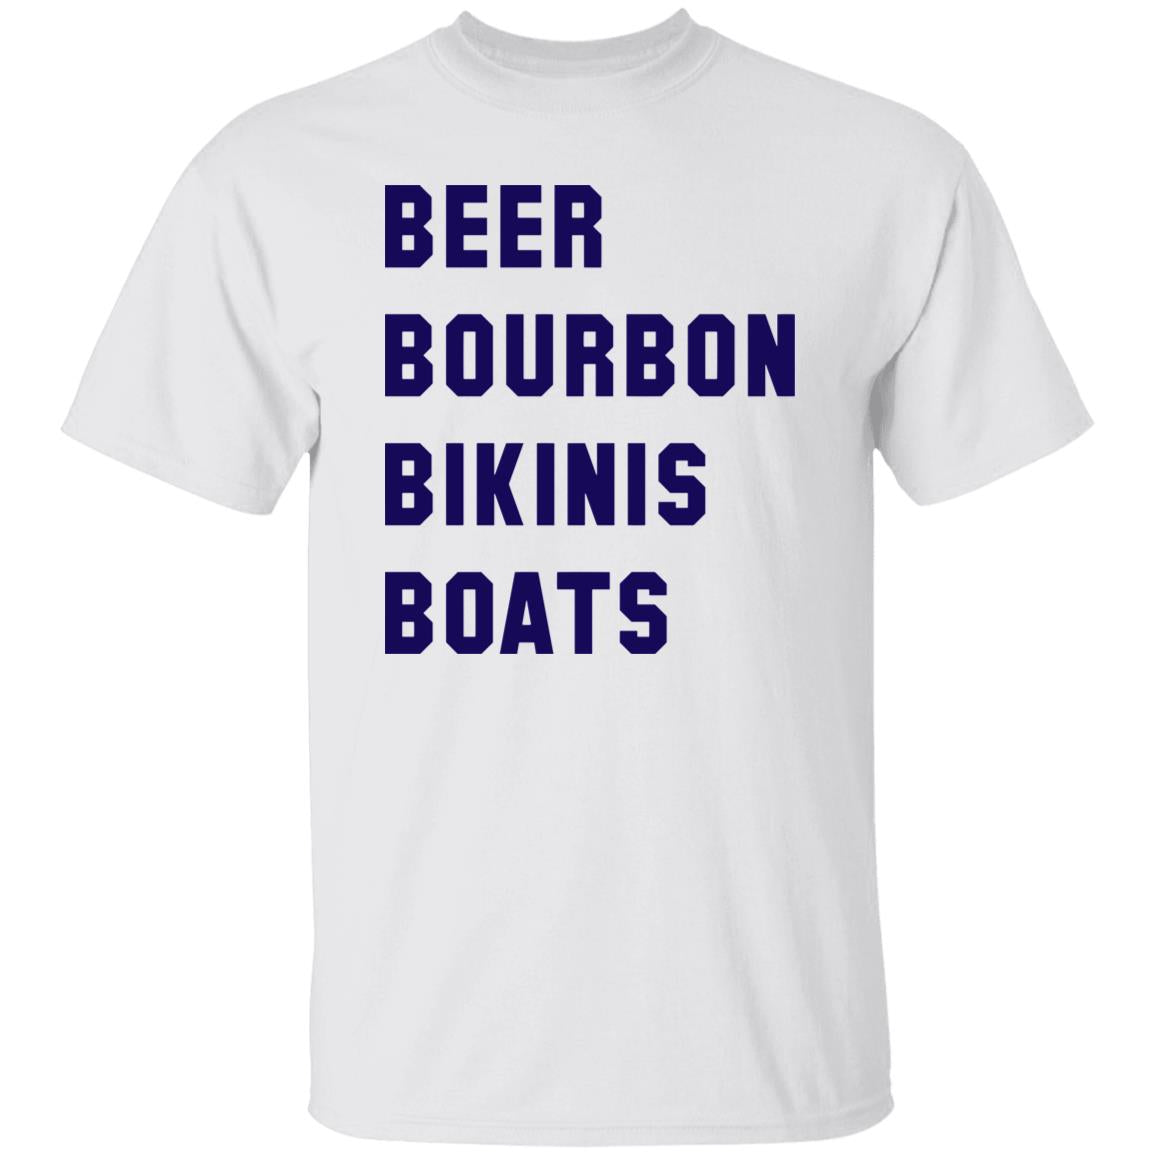 HRCL FL - Navy Beer Bourbon Bikinis Boats - 2 Sided G500 5.3 oz. T-Shirt